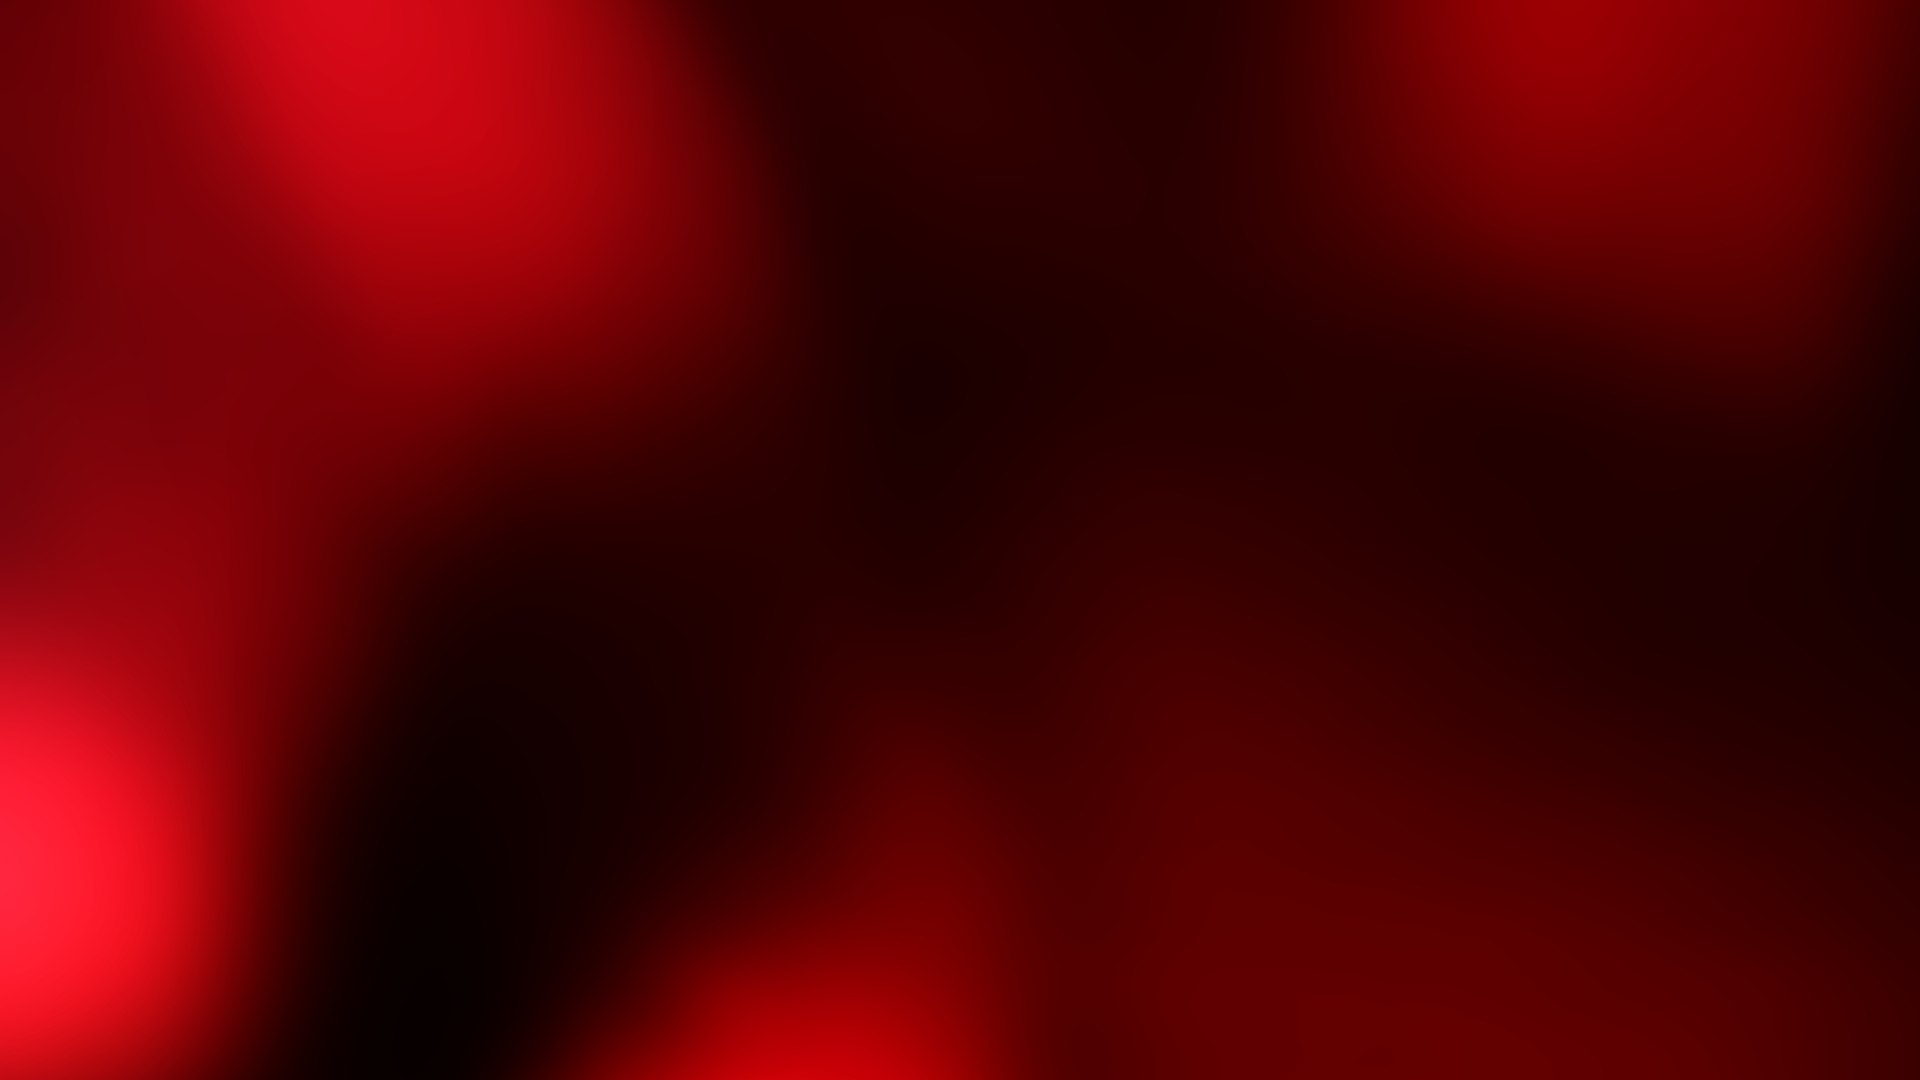 blurry red desktop wallpapers backgrounds